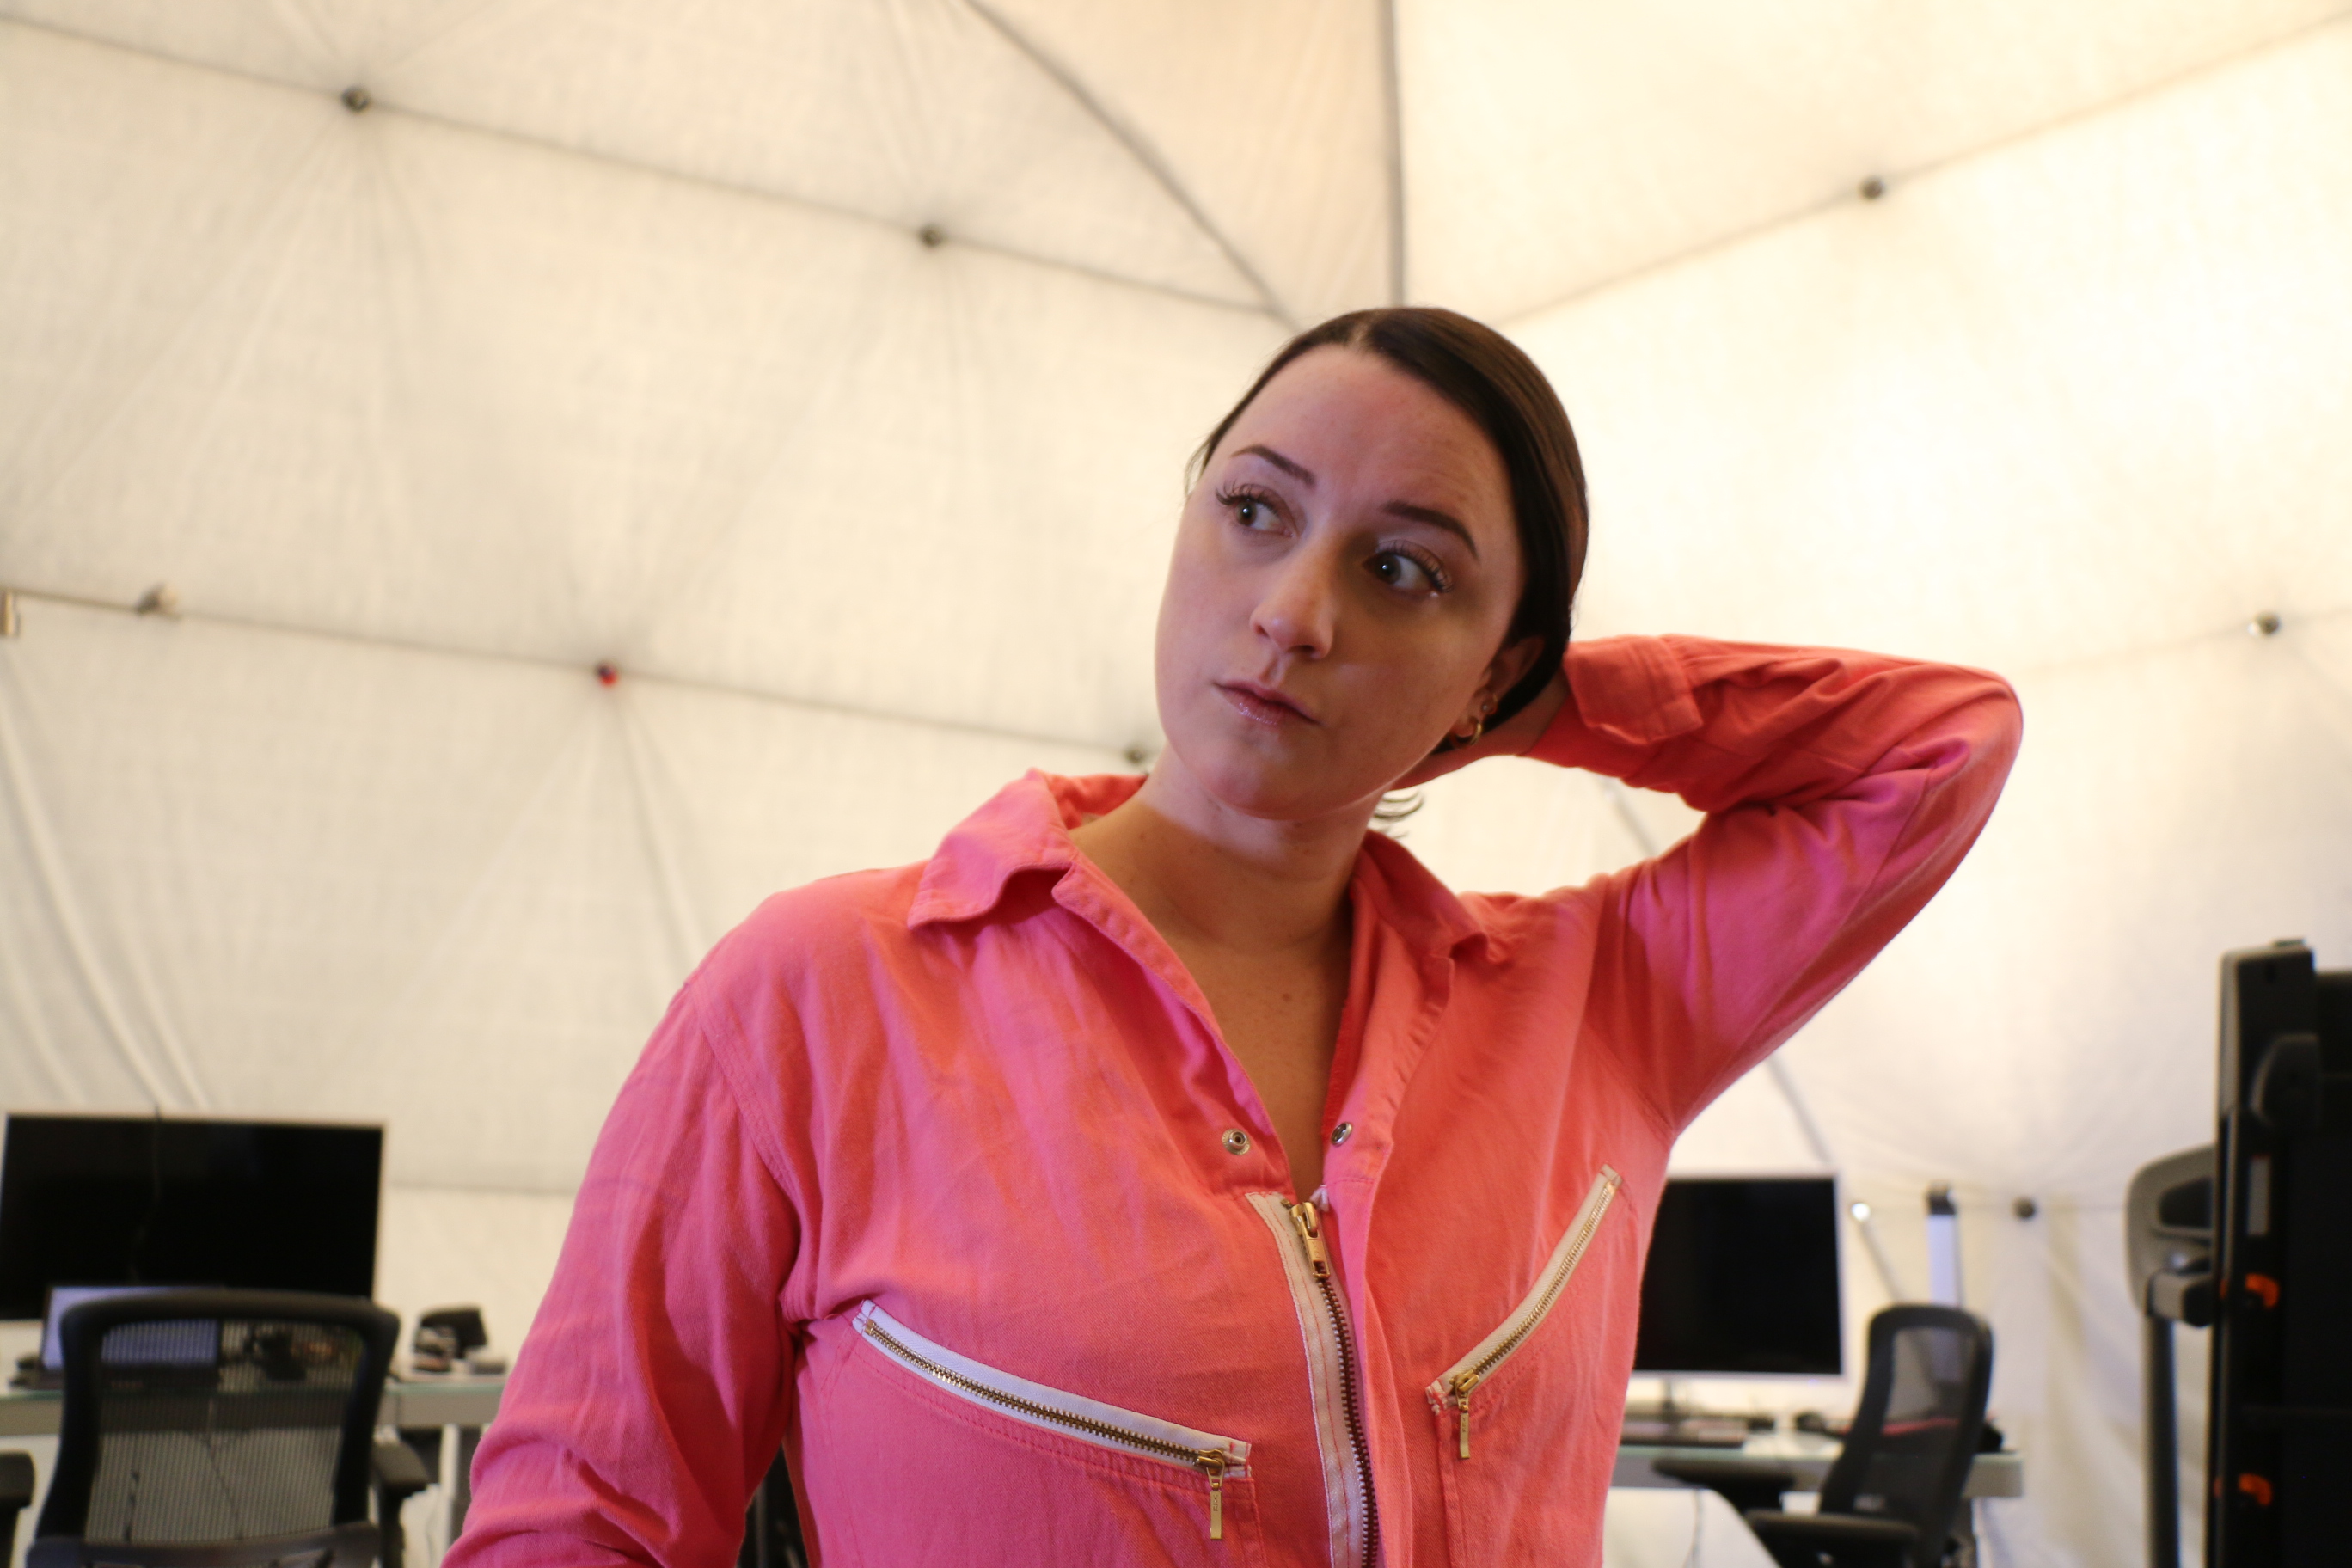 Chelsea Gohd works in the HI-SEAS habitat on the Sensoria 2 Mars simulation mission in Hawaii.